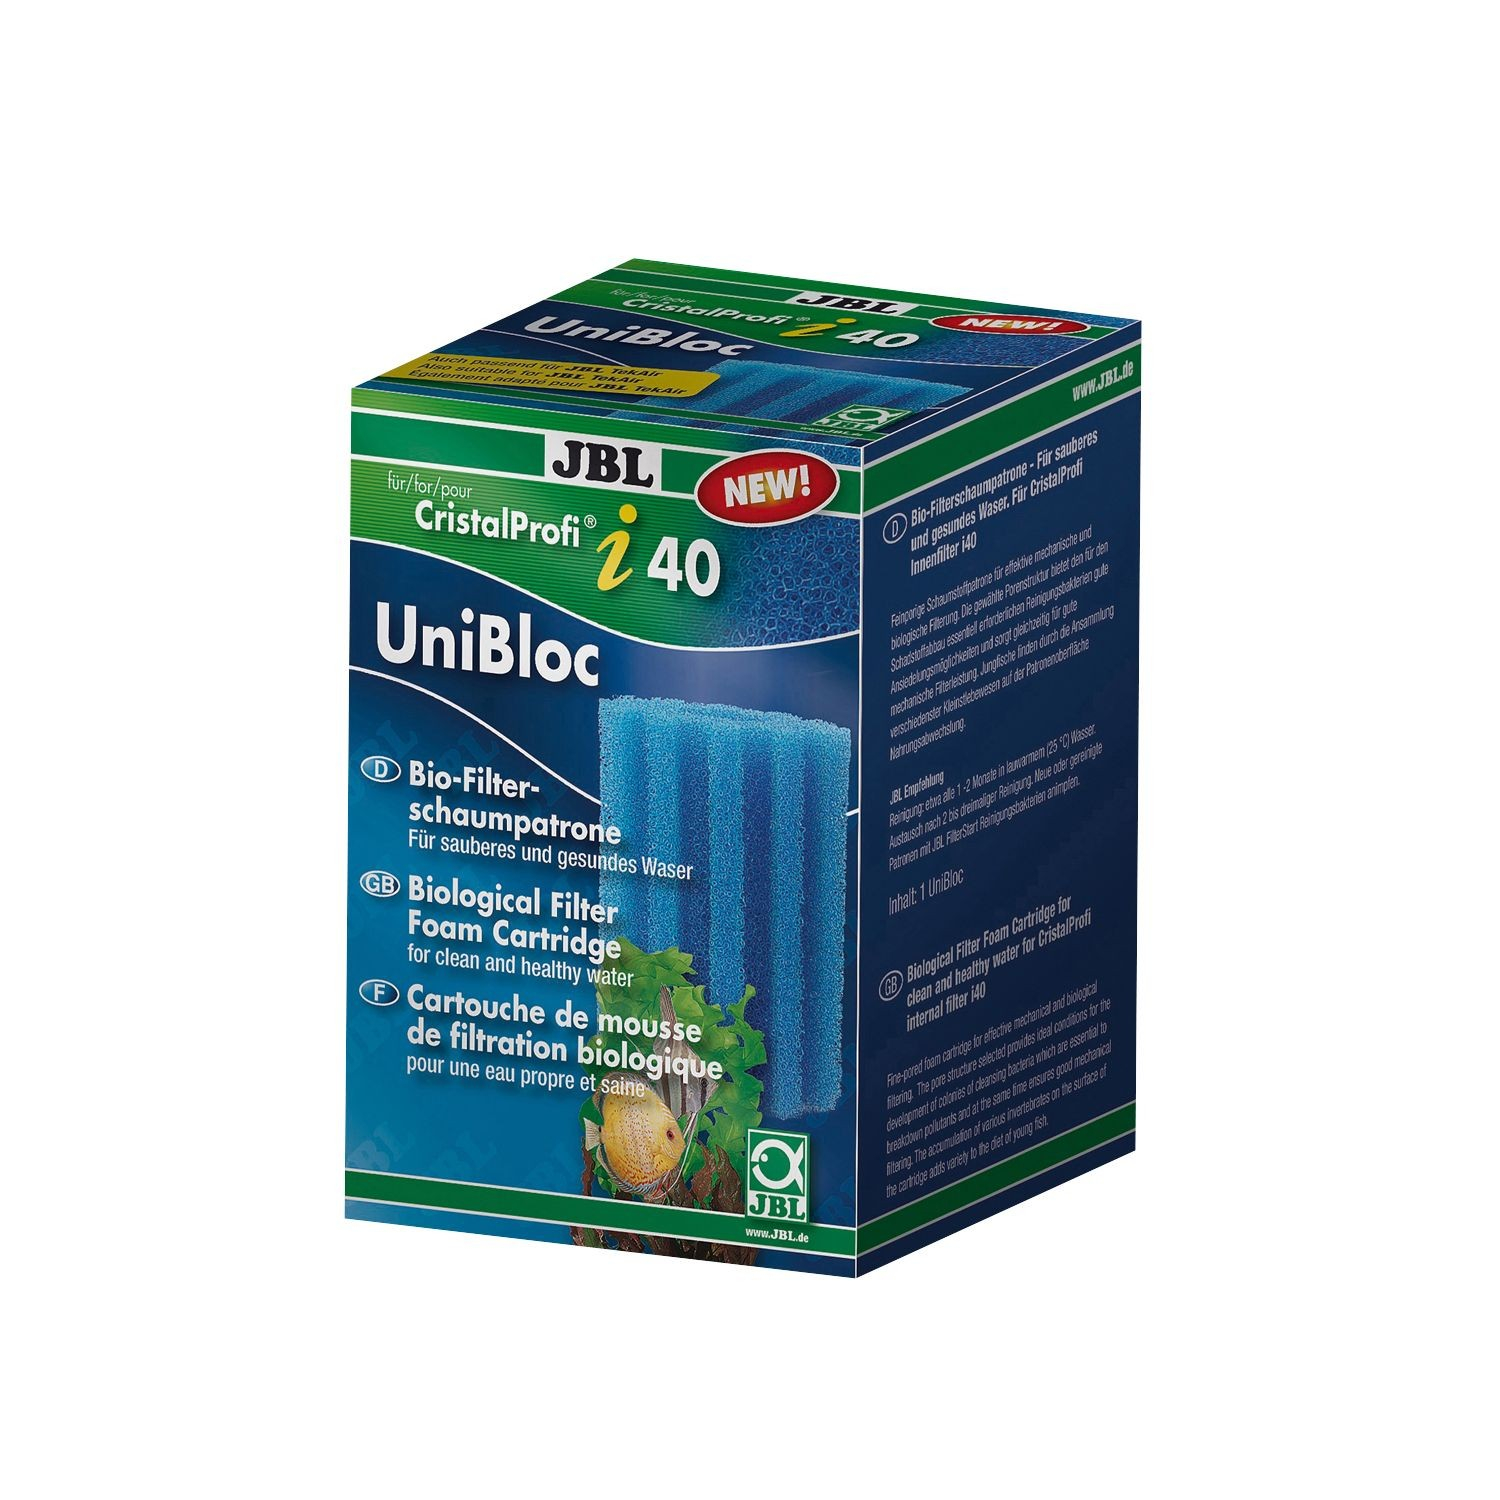  Esponja de filtración UniBloc para filtro CristalProfi i40